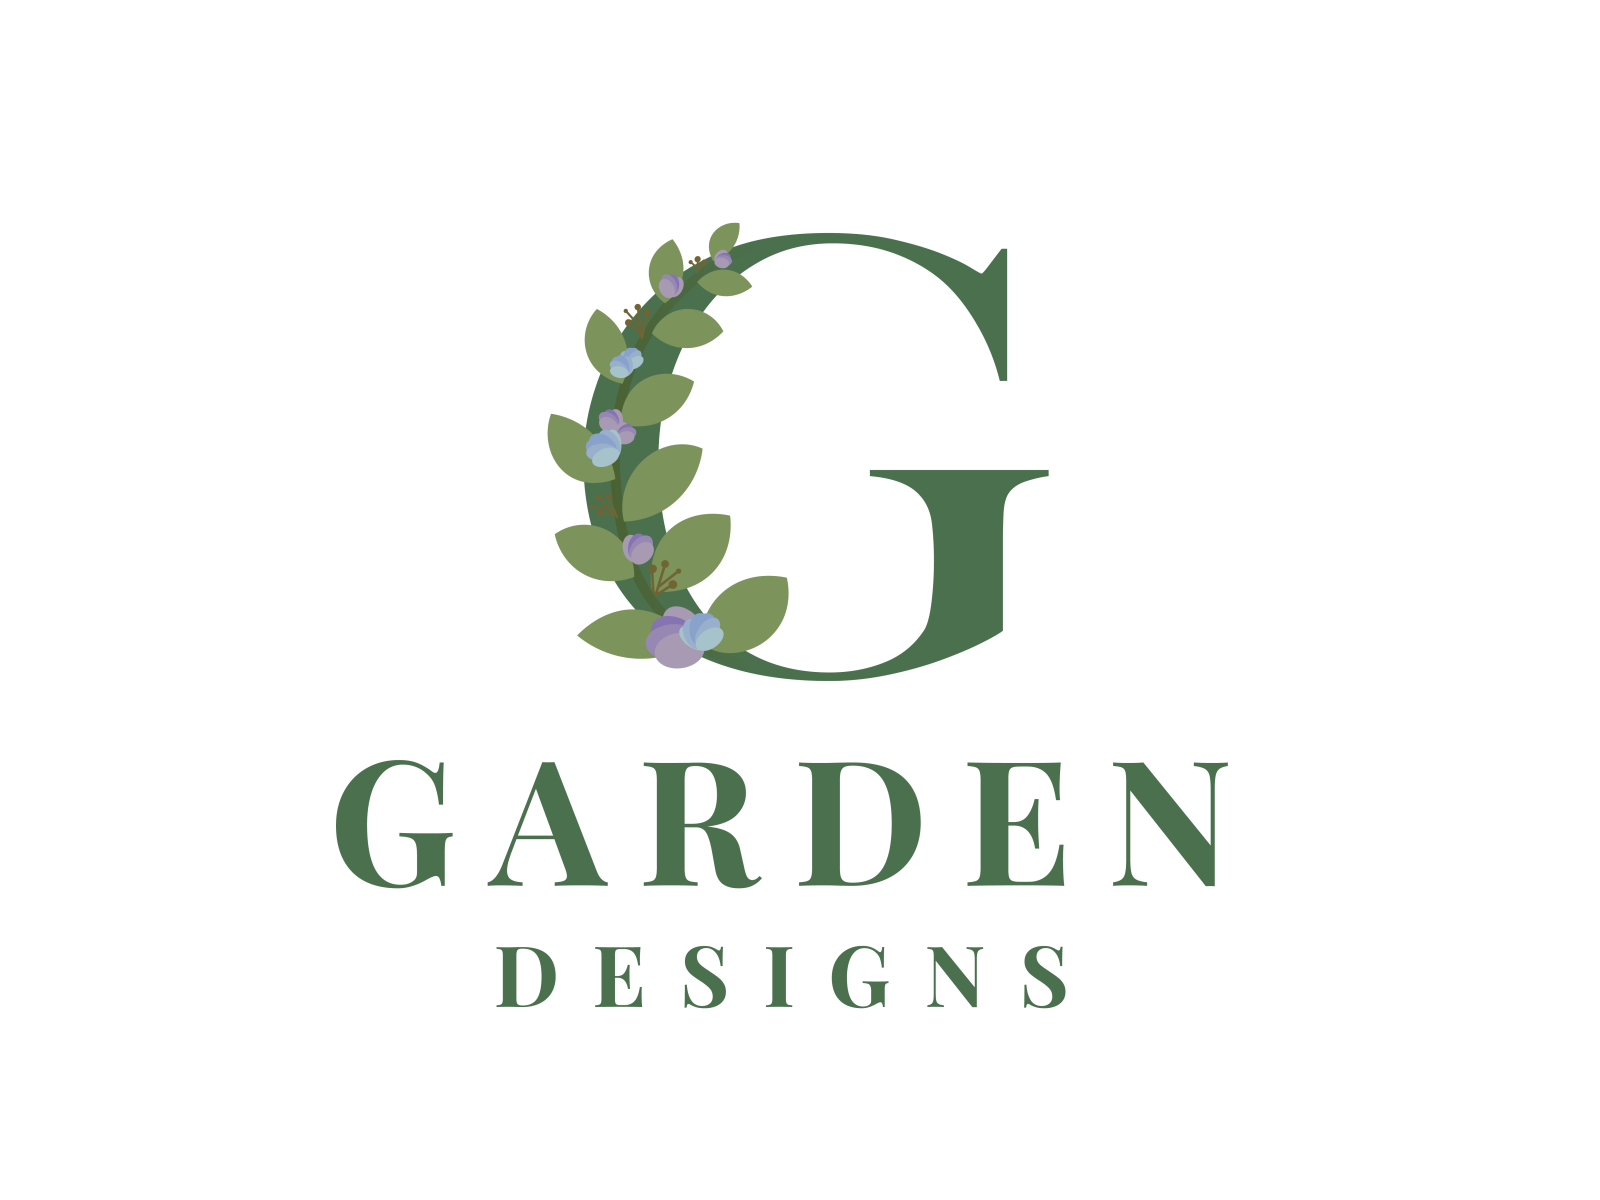 Garden Designs Logo by Amanda Decker Garcia on Dribbble